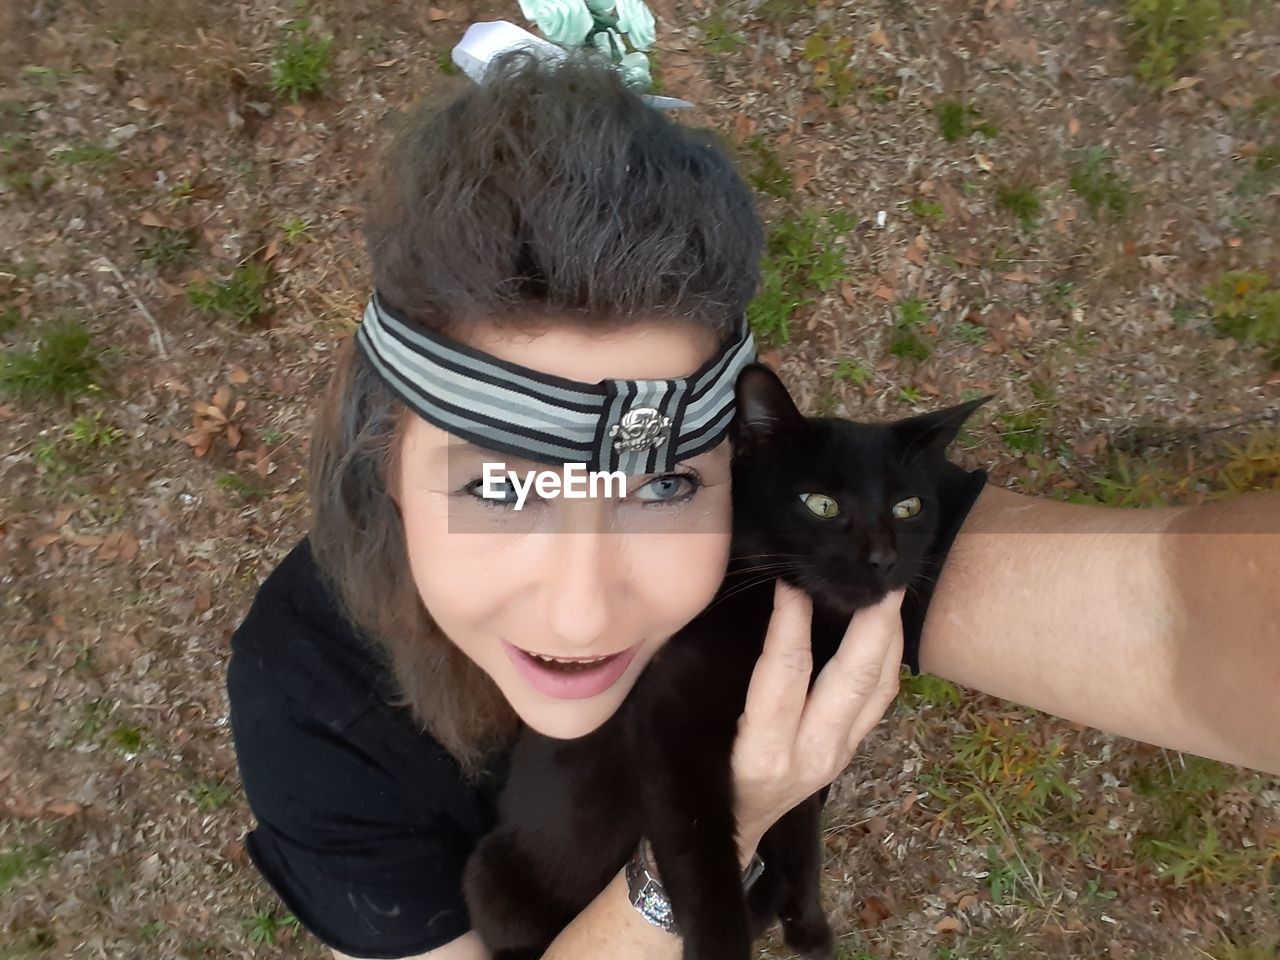 Woman wearing headband holding cat outdoors